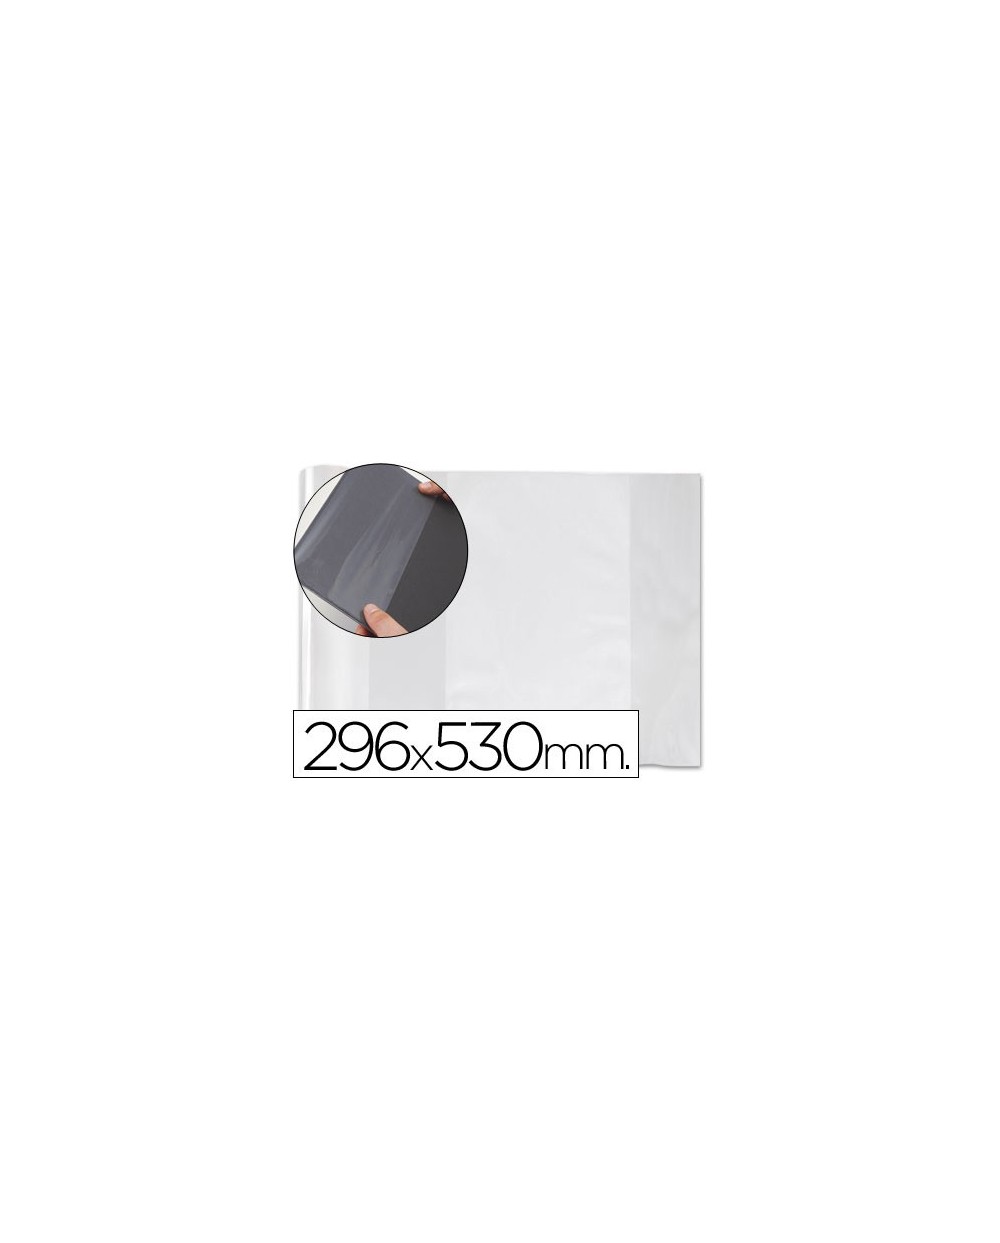 Forralibro pvc con solapa ajustable adhesivo 290x530 mm